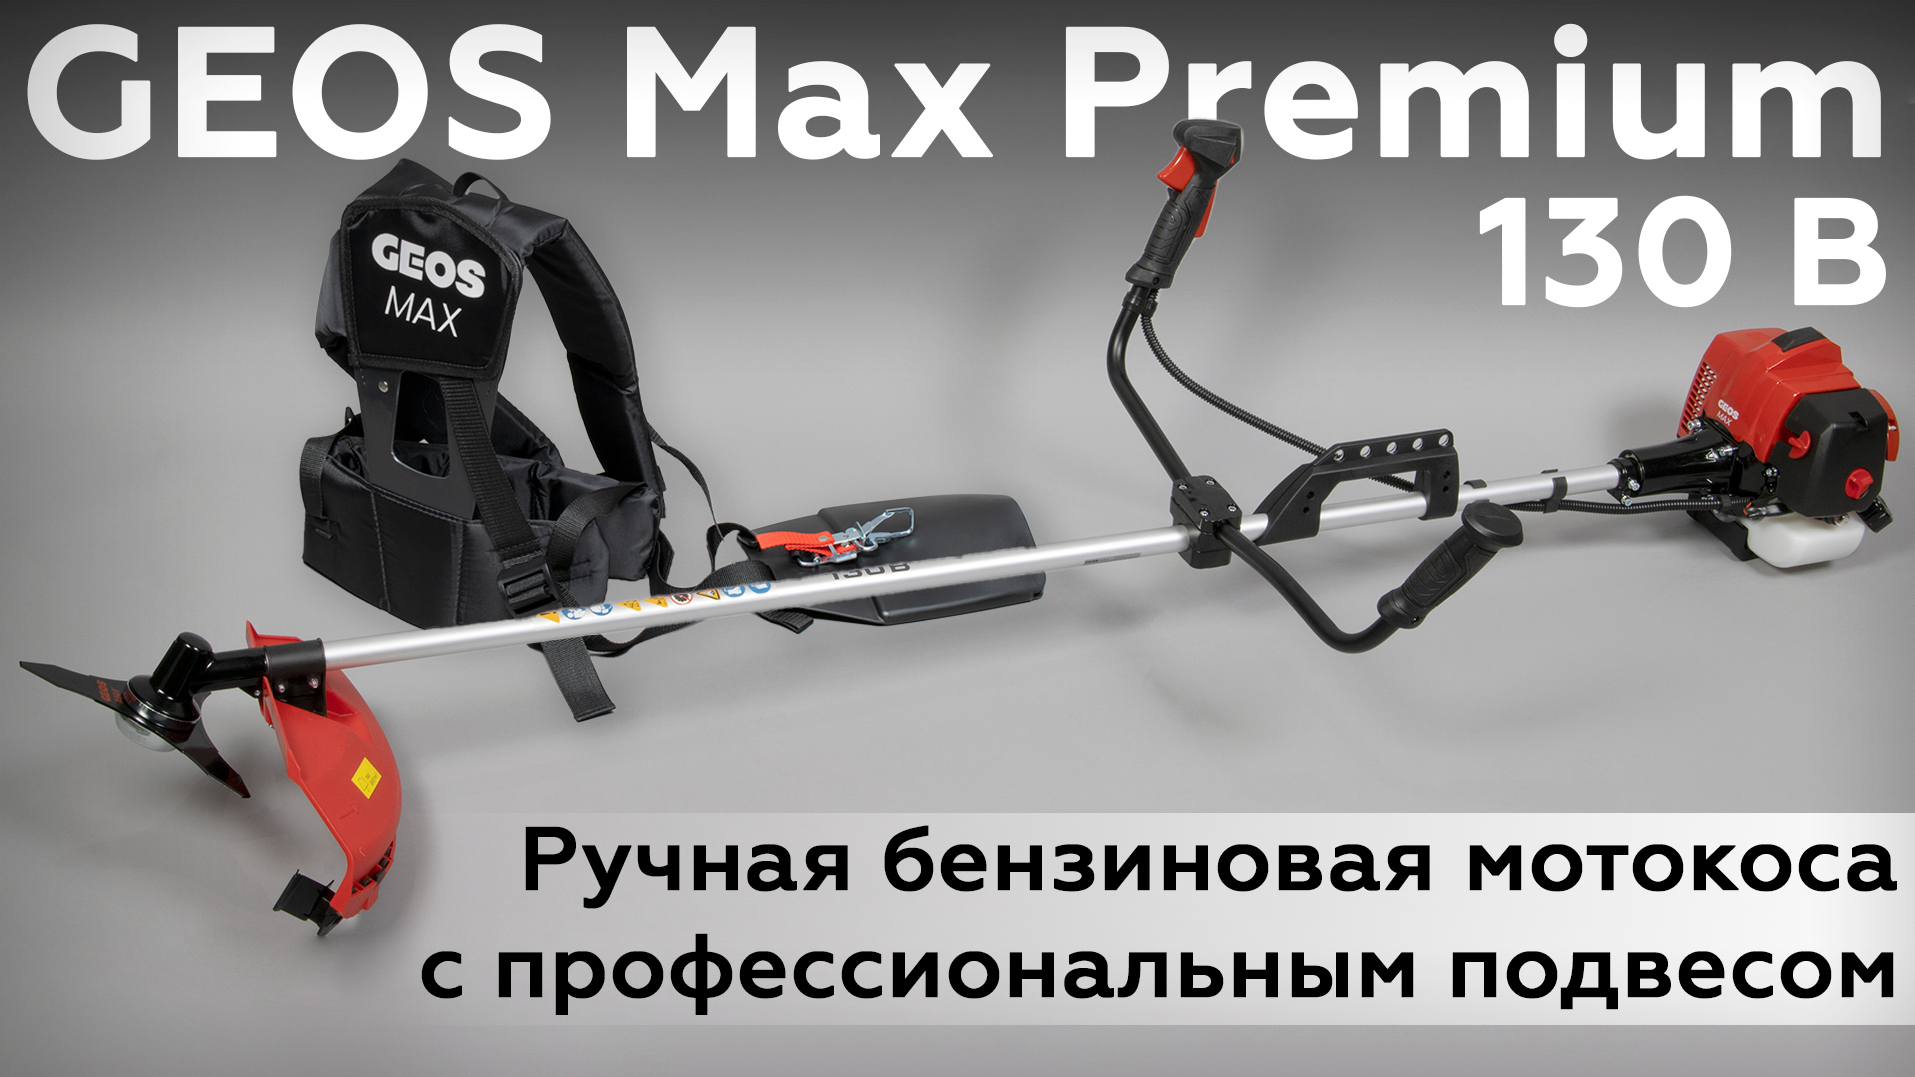 Бензиновая мотокоса GEOS Max Premium 130 B